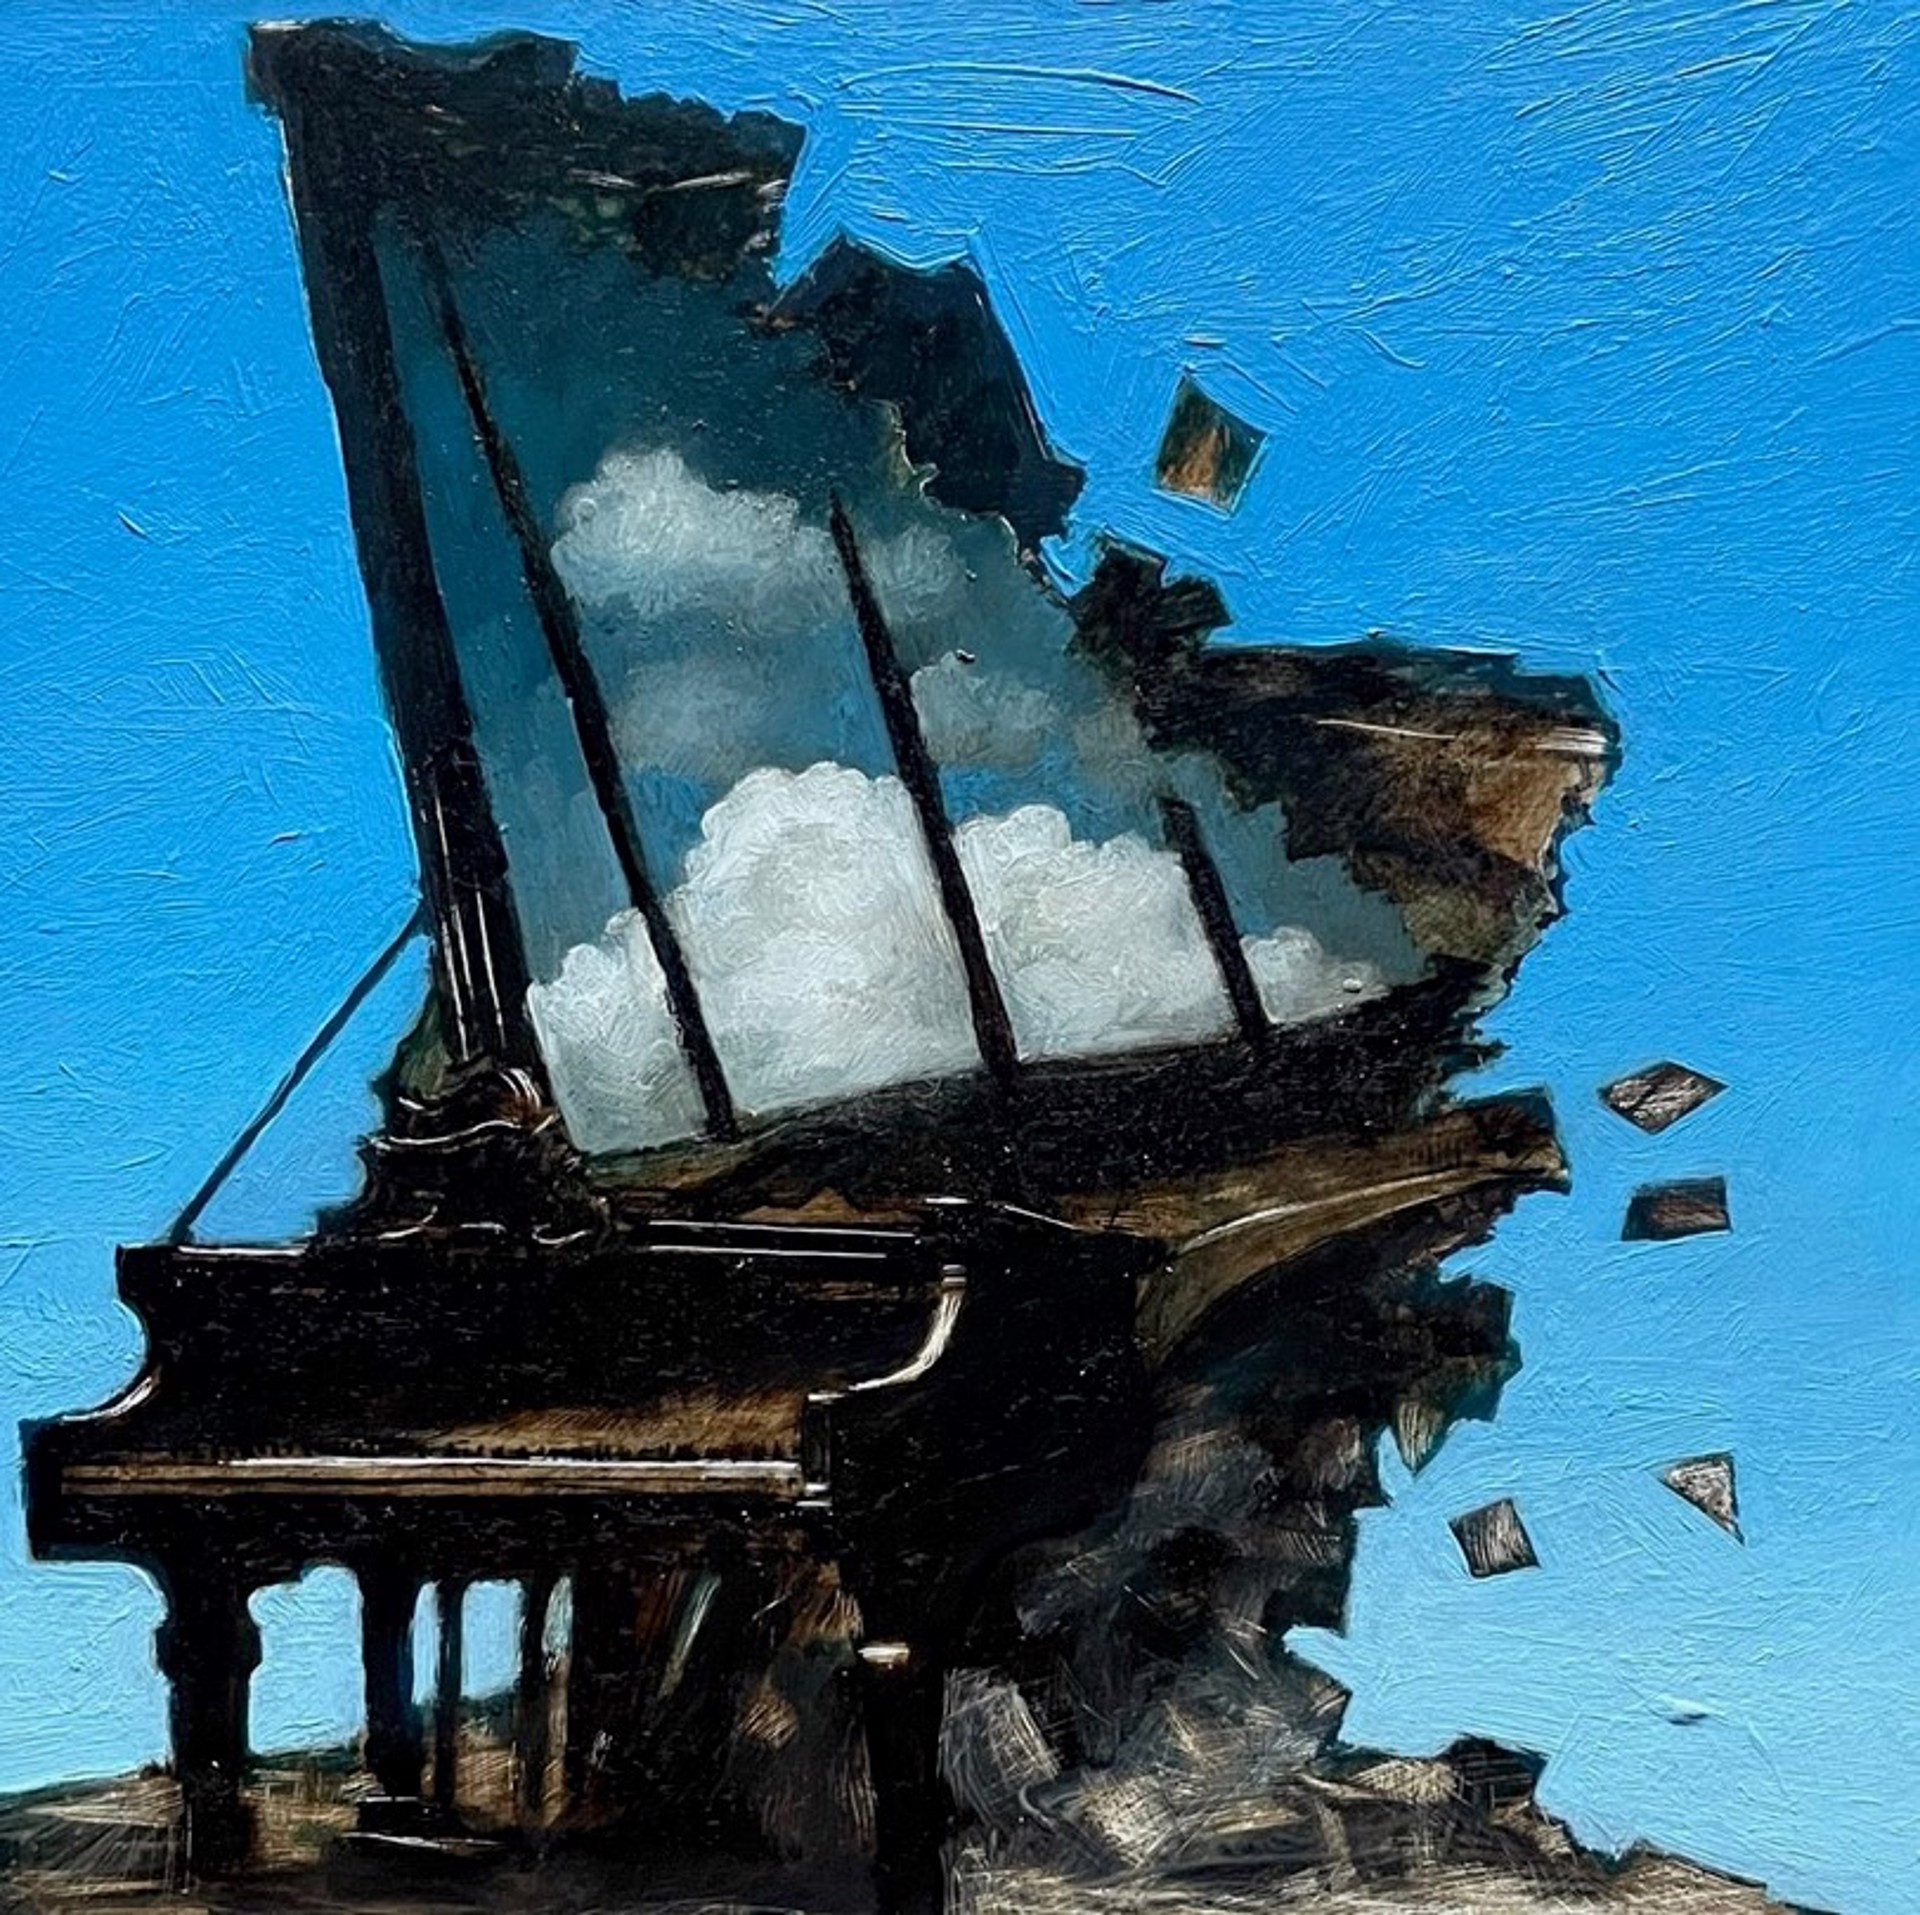 Piano by Matt Lively